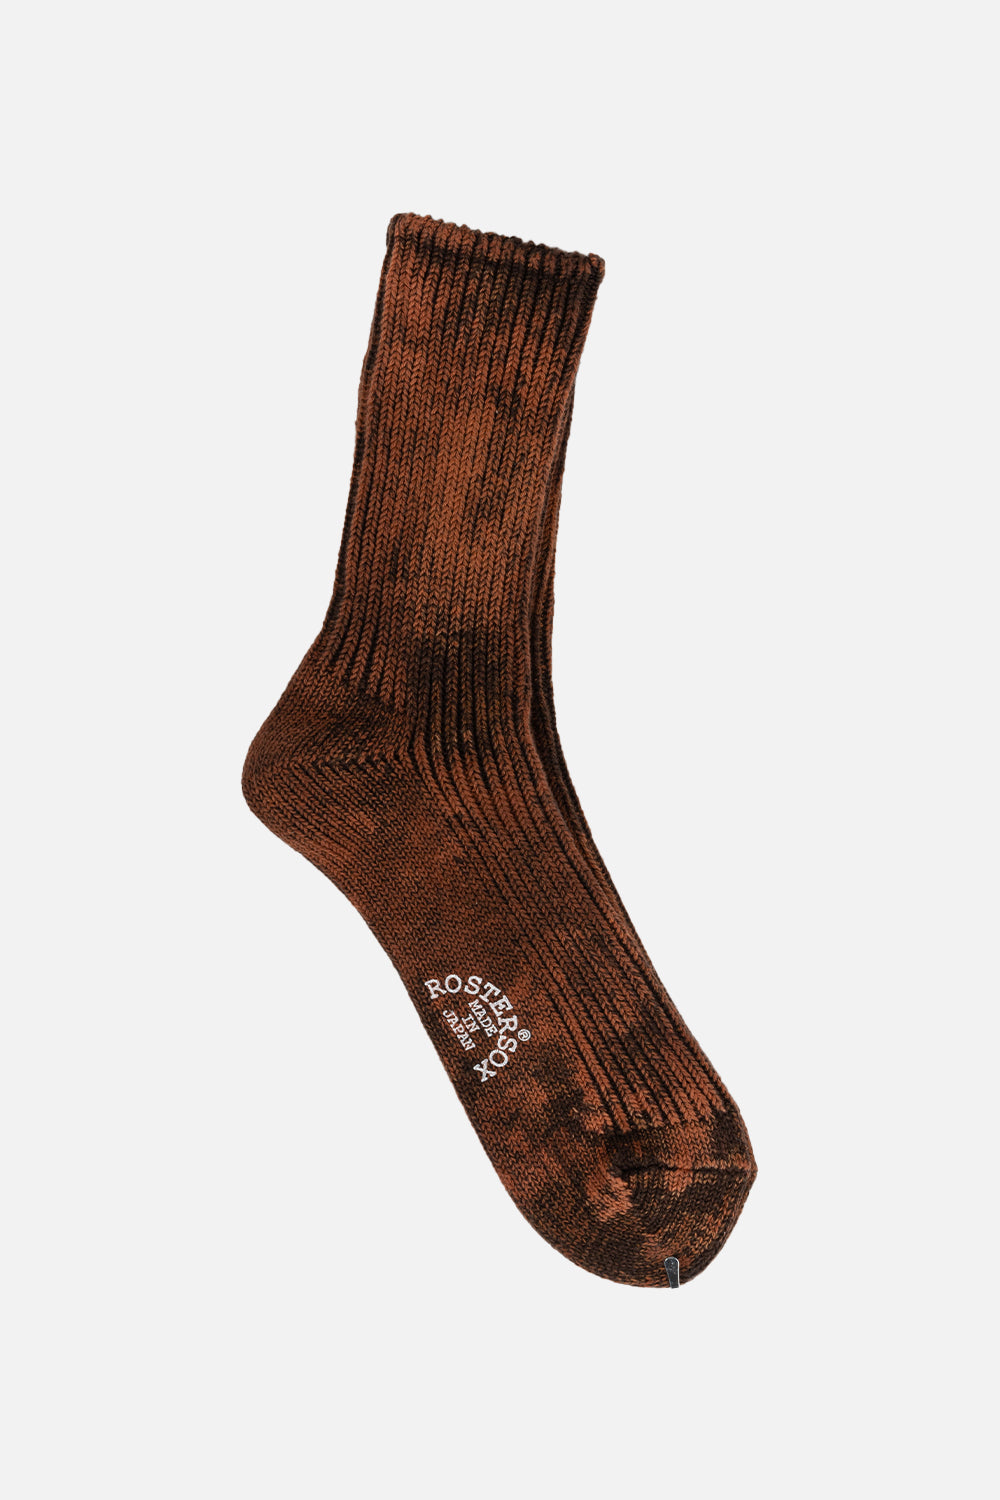 Rostersox-BA-brown-socks